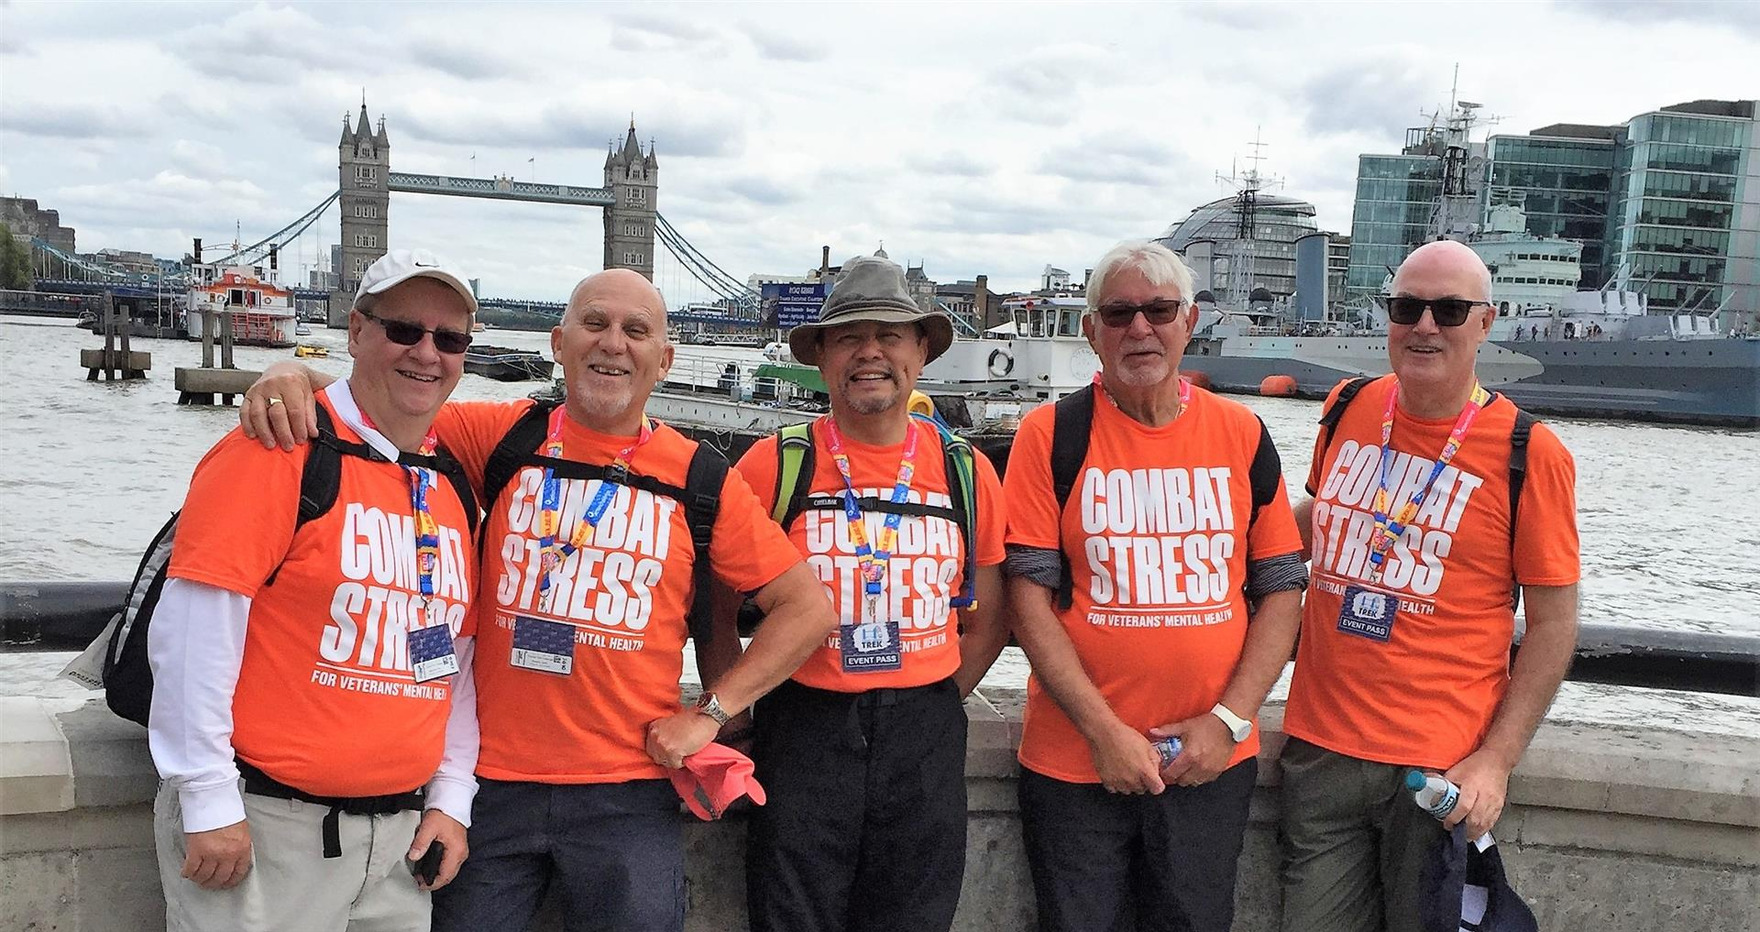 Brethren complete Thames Bridge Trek in aid of Combat Stress